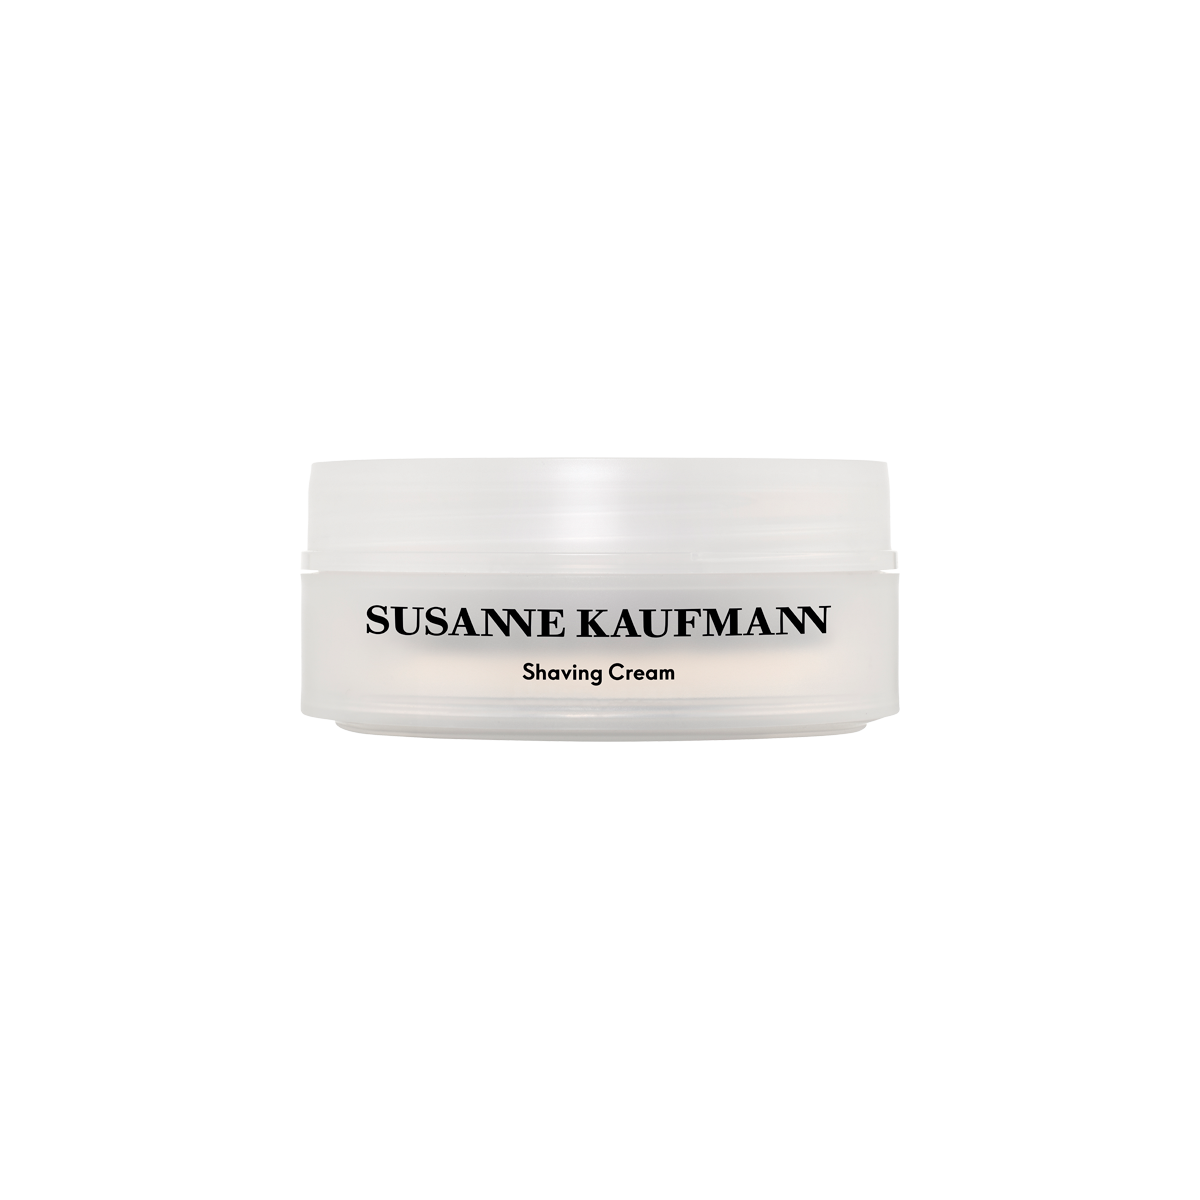 Susanne Kaufmann - Shaving Cream